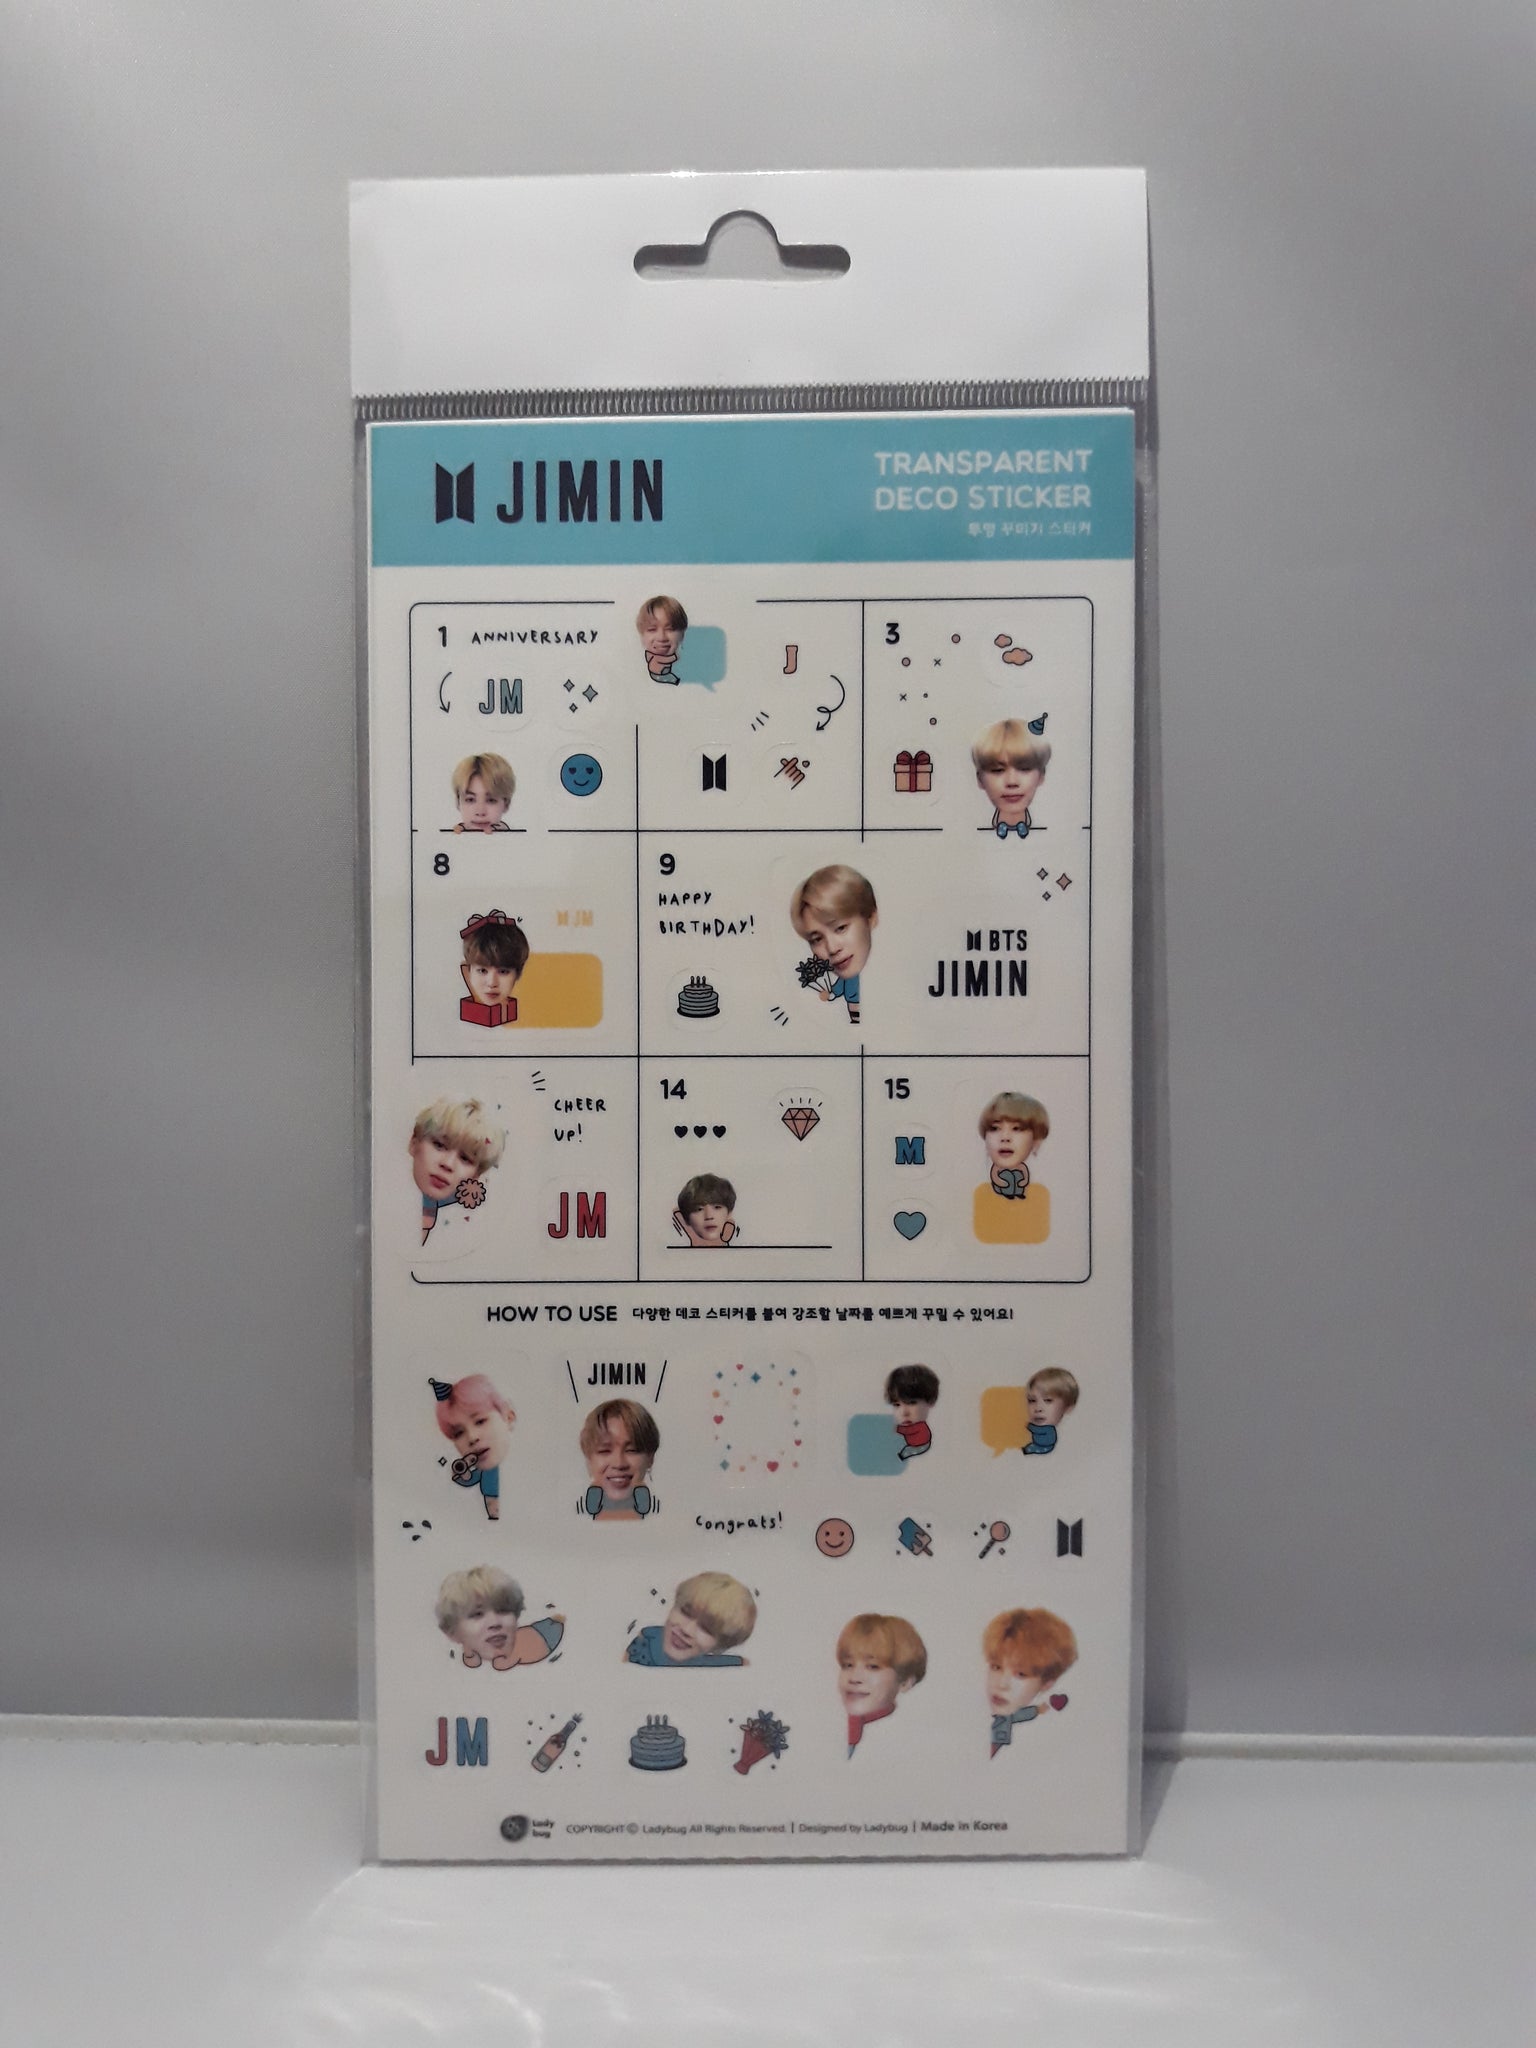 Transparent Deco Stickers - BTS JIMIN